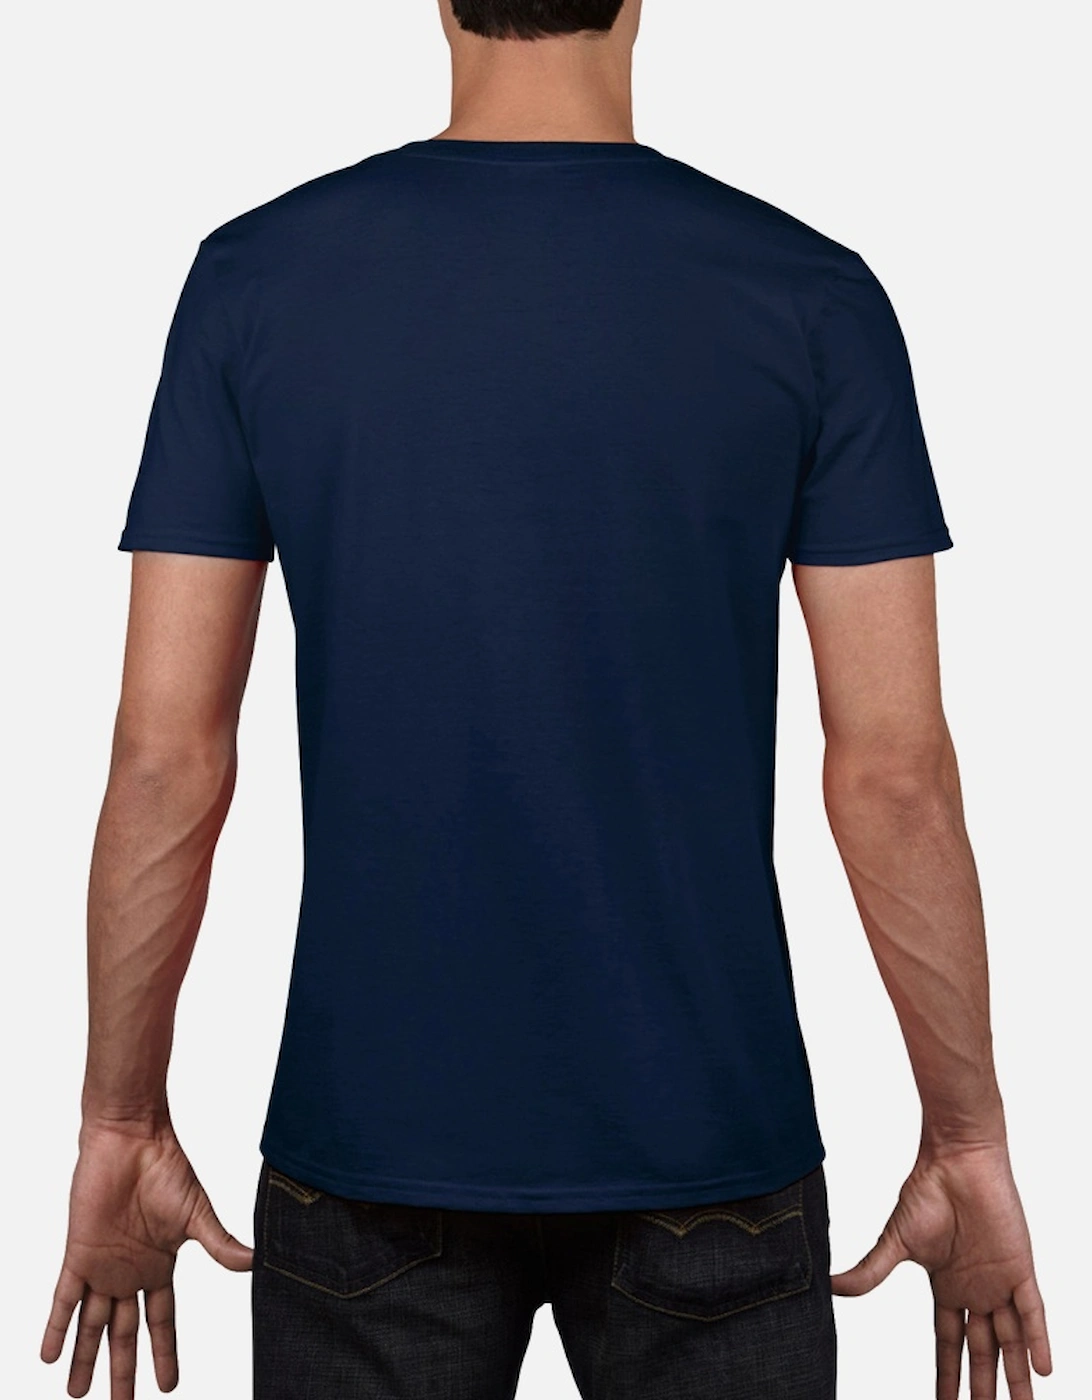 Mens Soft Style V-Neck Short Sleeve T-Shirt